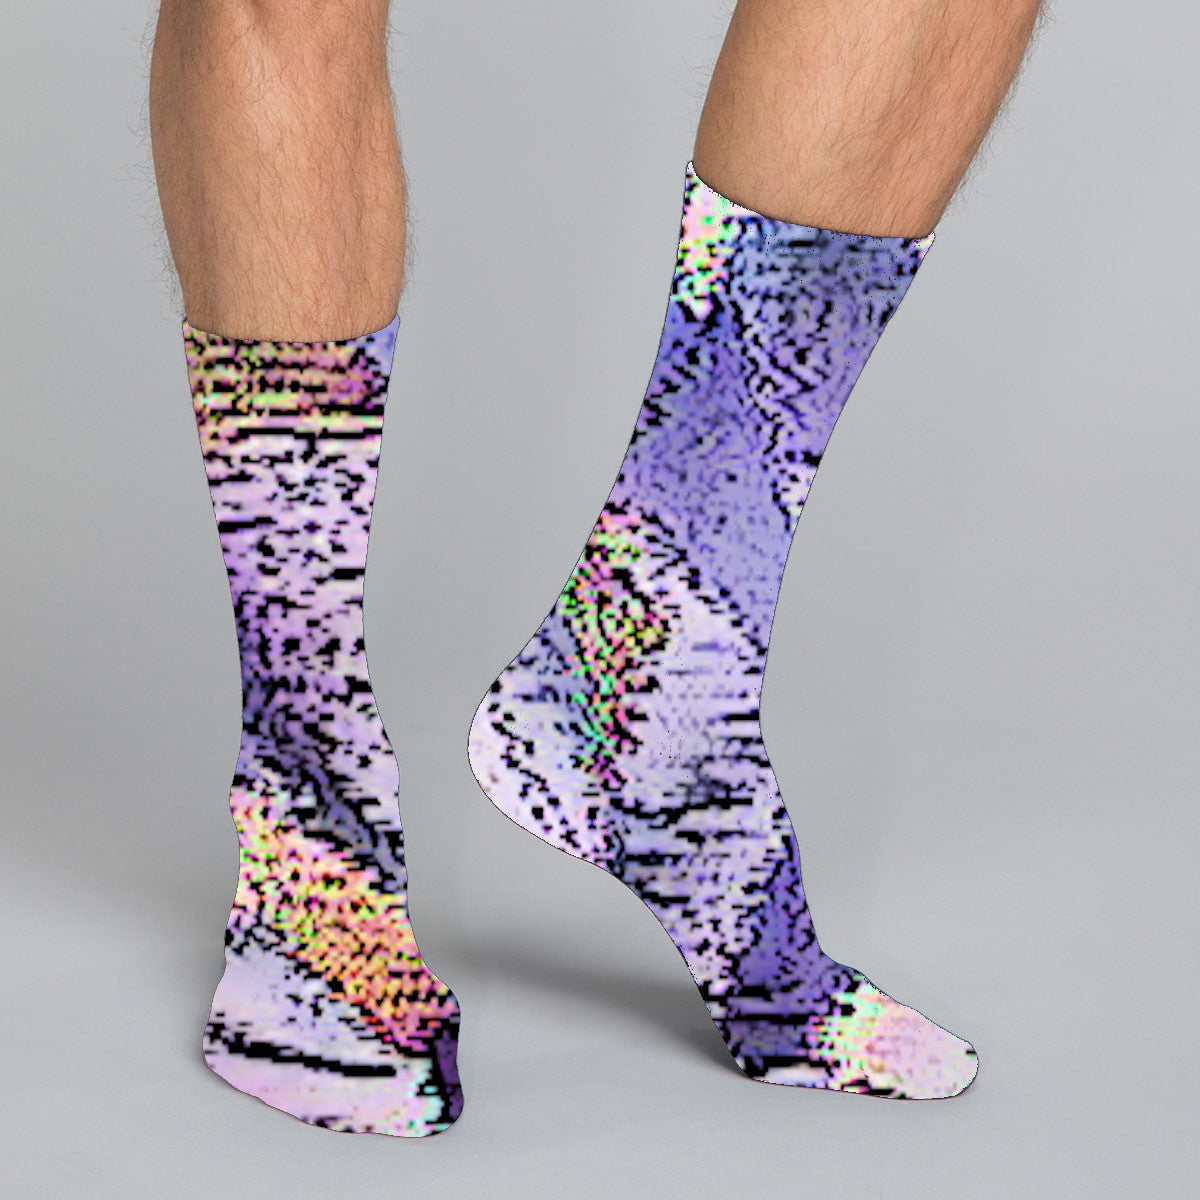 Women's and men's casual crew socks in unique colorful design celebrating food, fashion, fitness, fun